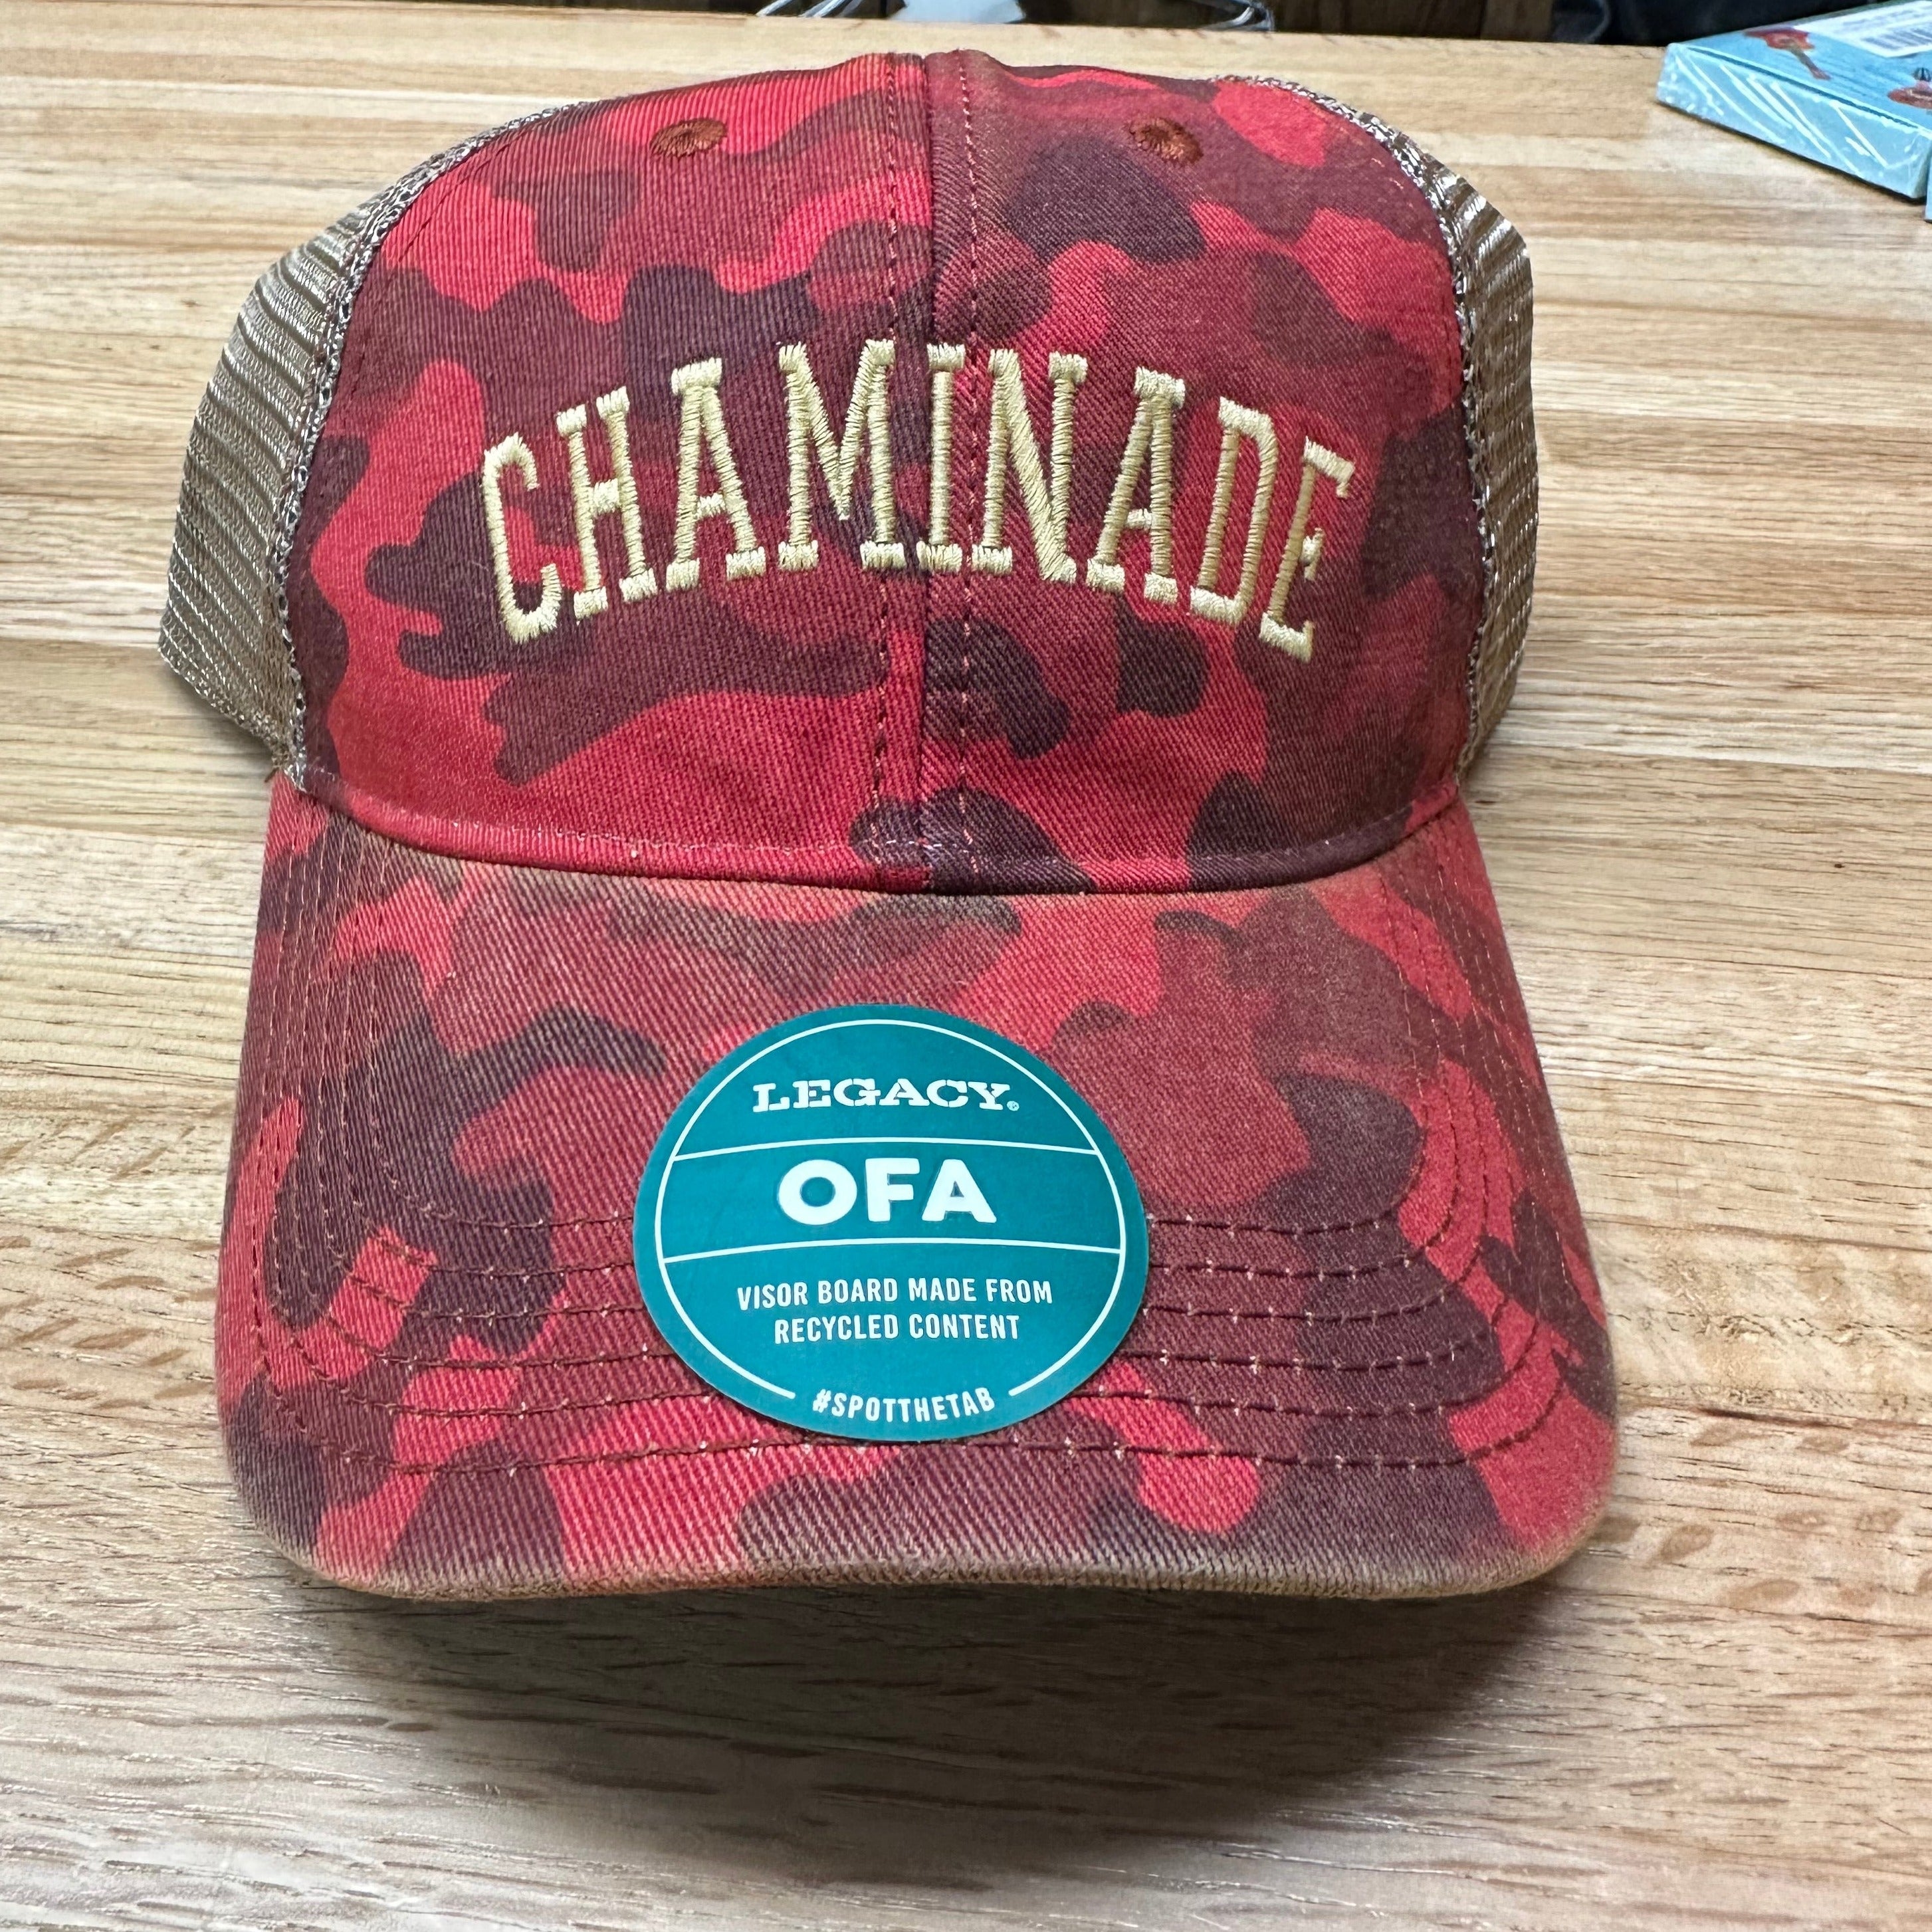 Dark Red Camo Trucker Hat with Chaminade